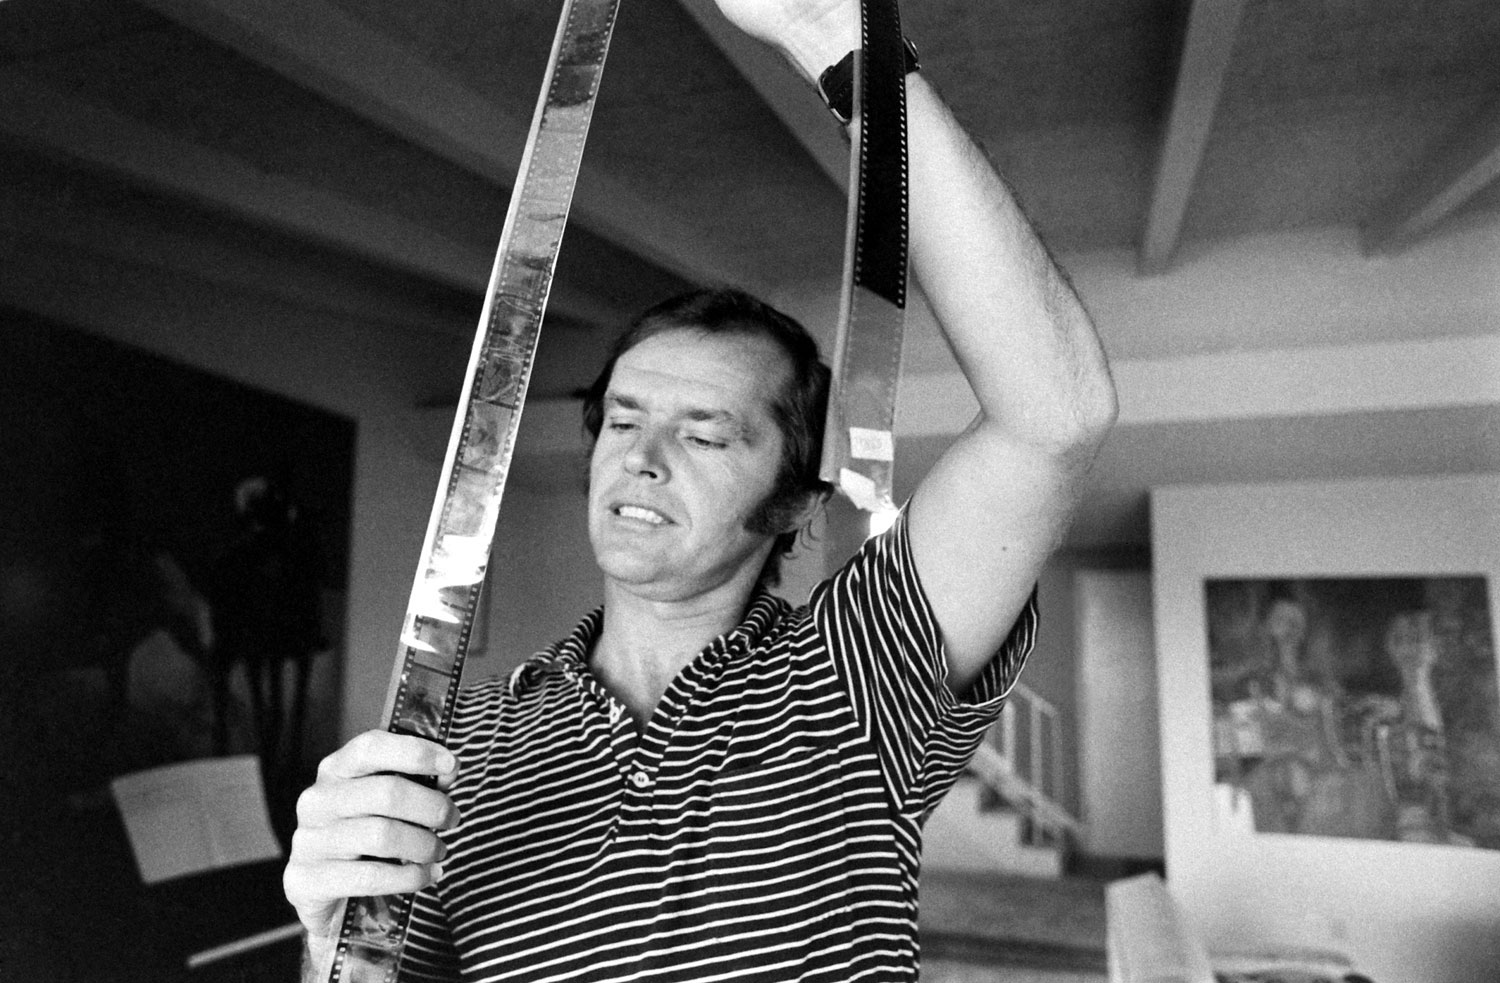 Jack Nicholson looks at film negatives at his home, Los Angeles, 1969.